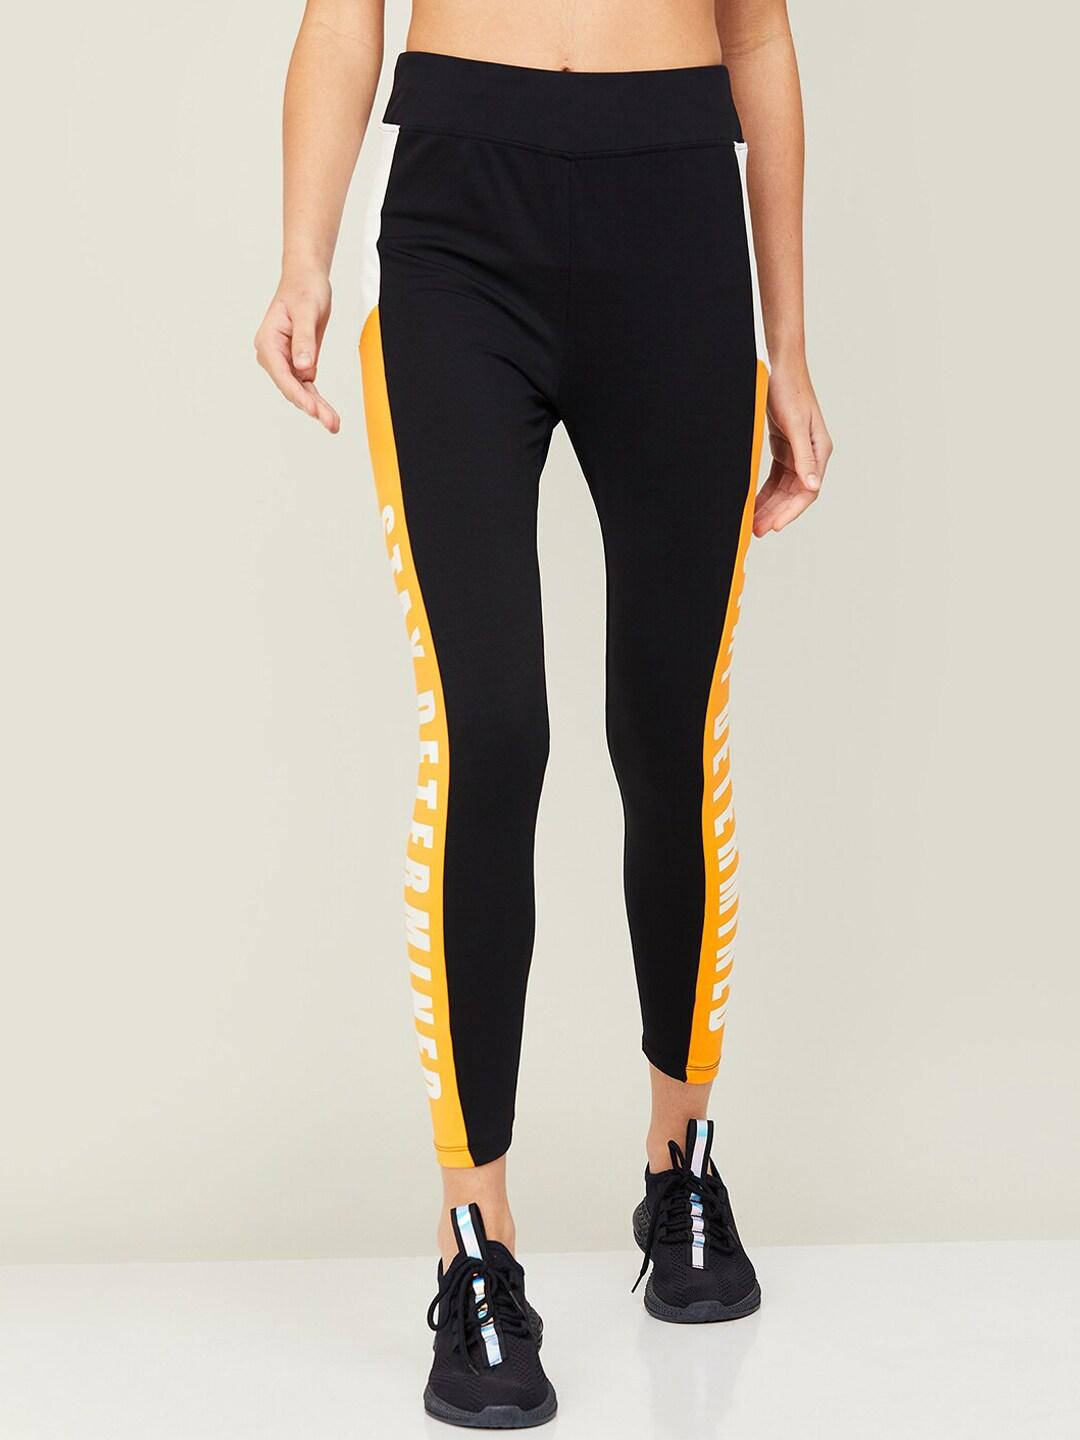 Kappa Women Printed Slim-Fit Ankle-Length Gym Tights